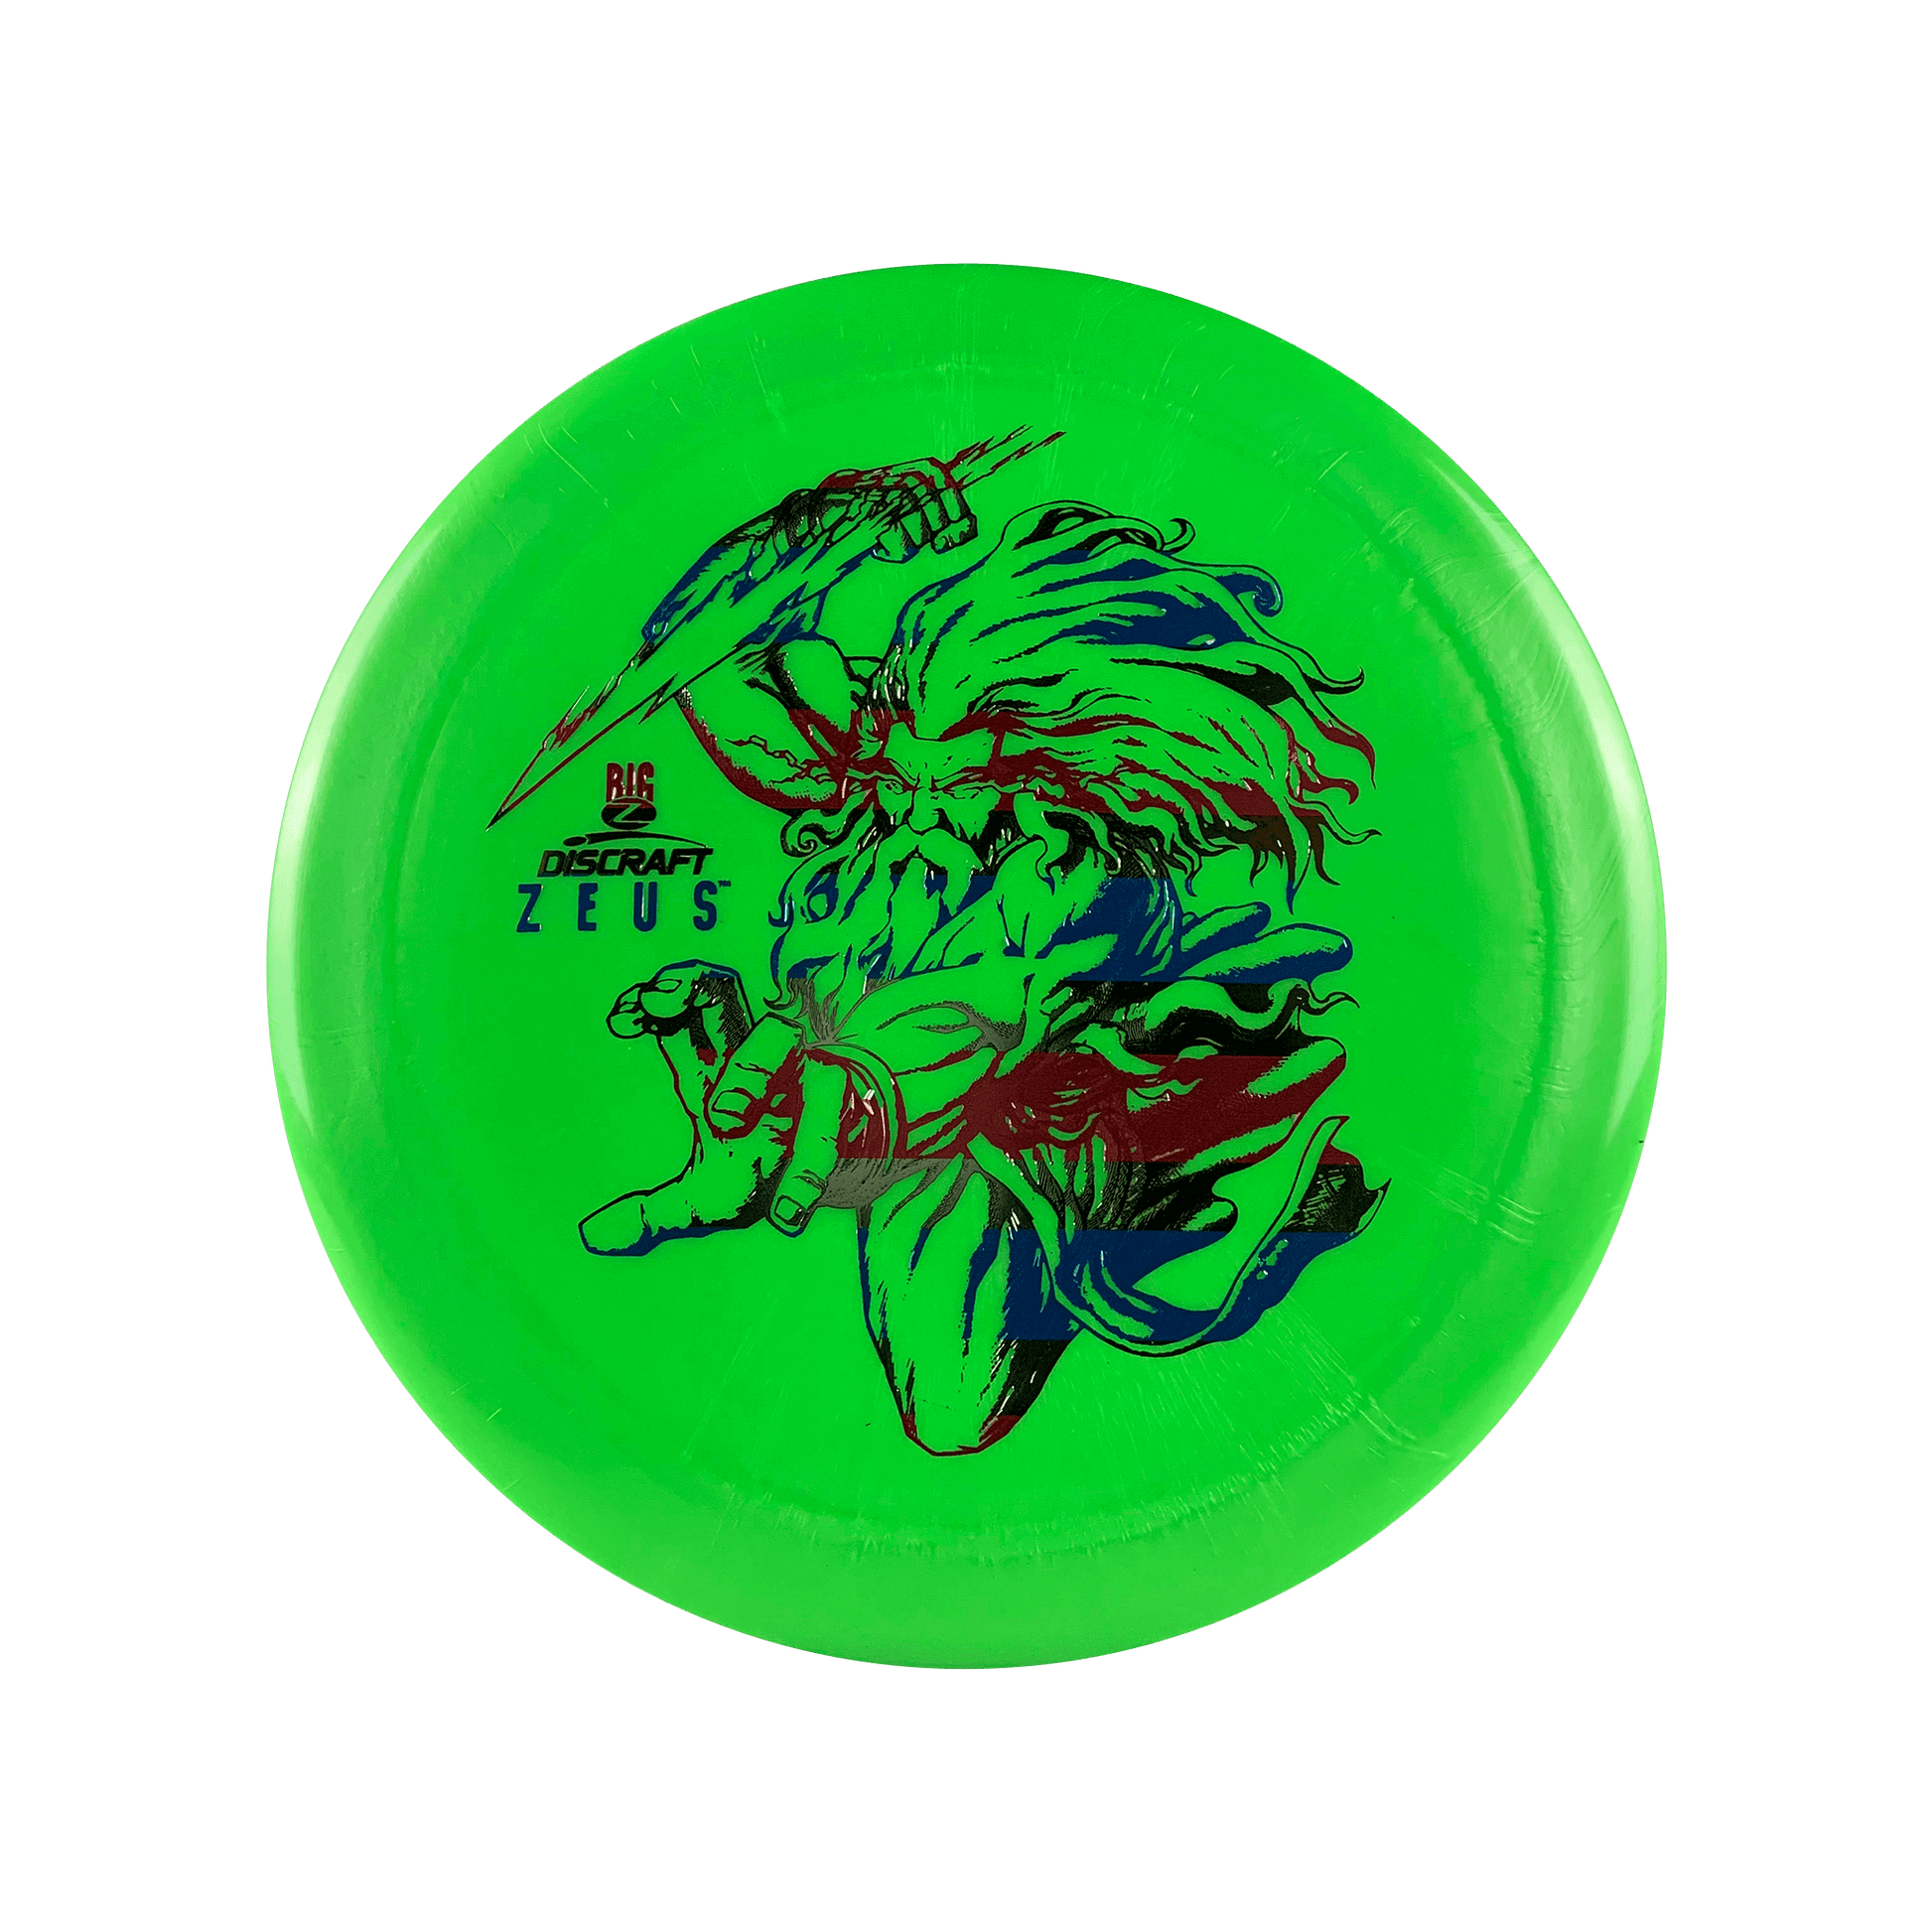 Big Z Zeus Disc Discraft green 173 